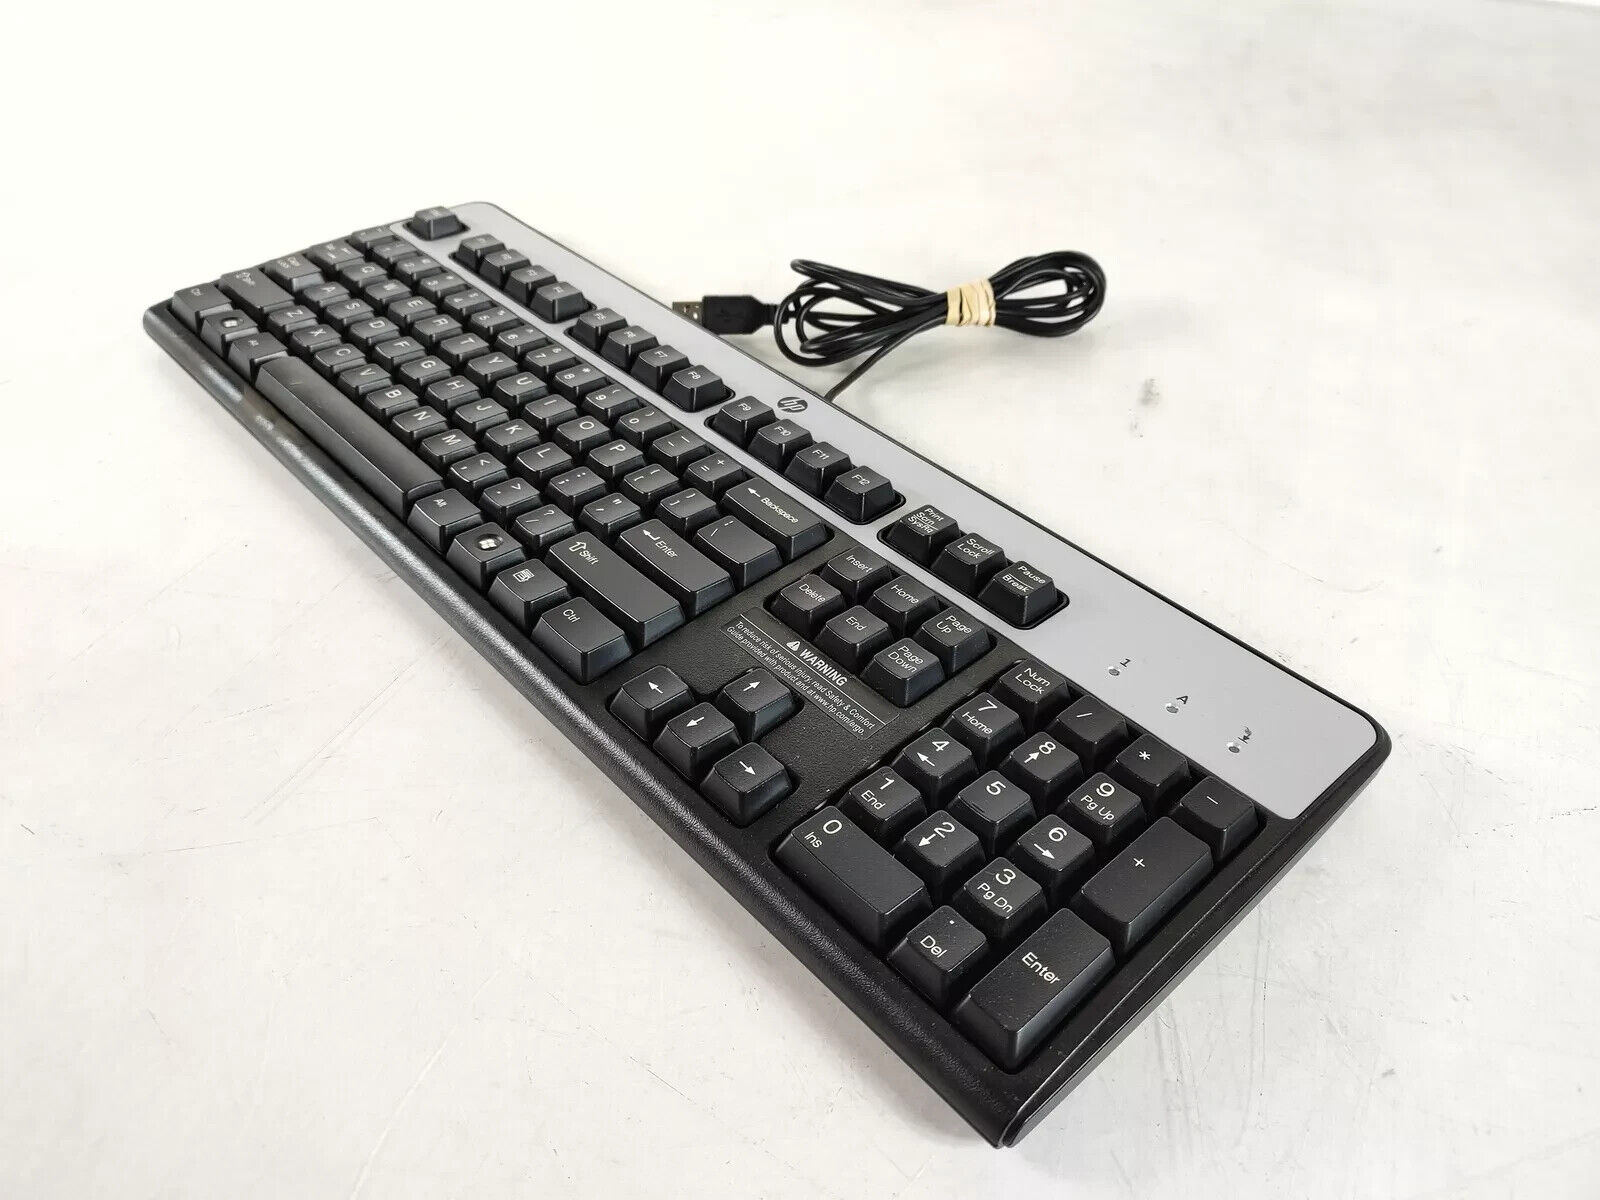 HP KU-0316 434821-001 Black/Silver Standard USB-Wired Keyboard